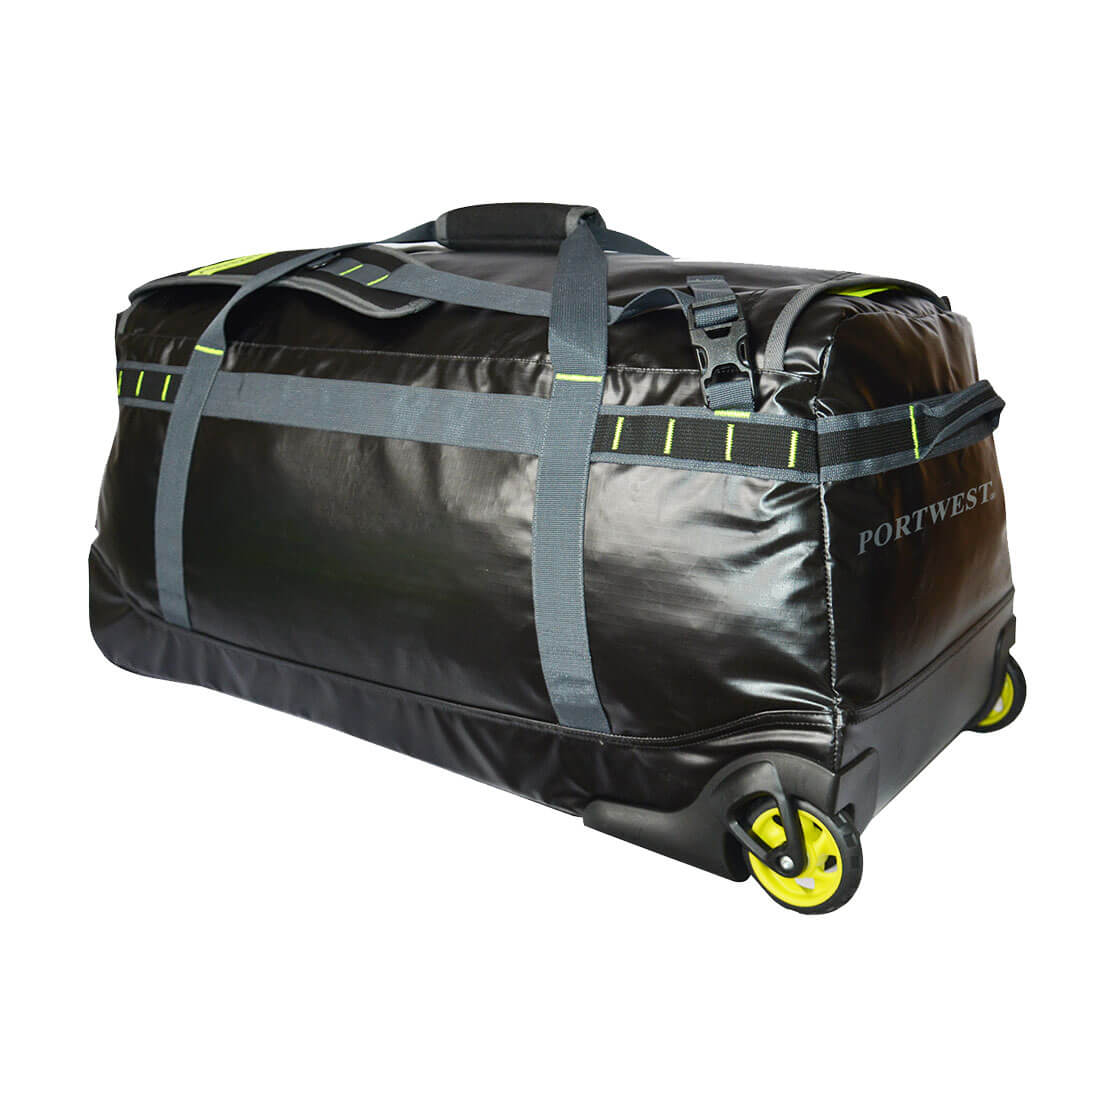 PW3 100L Water-resistant Duffle Trolley Bag - Black